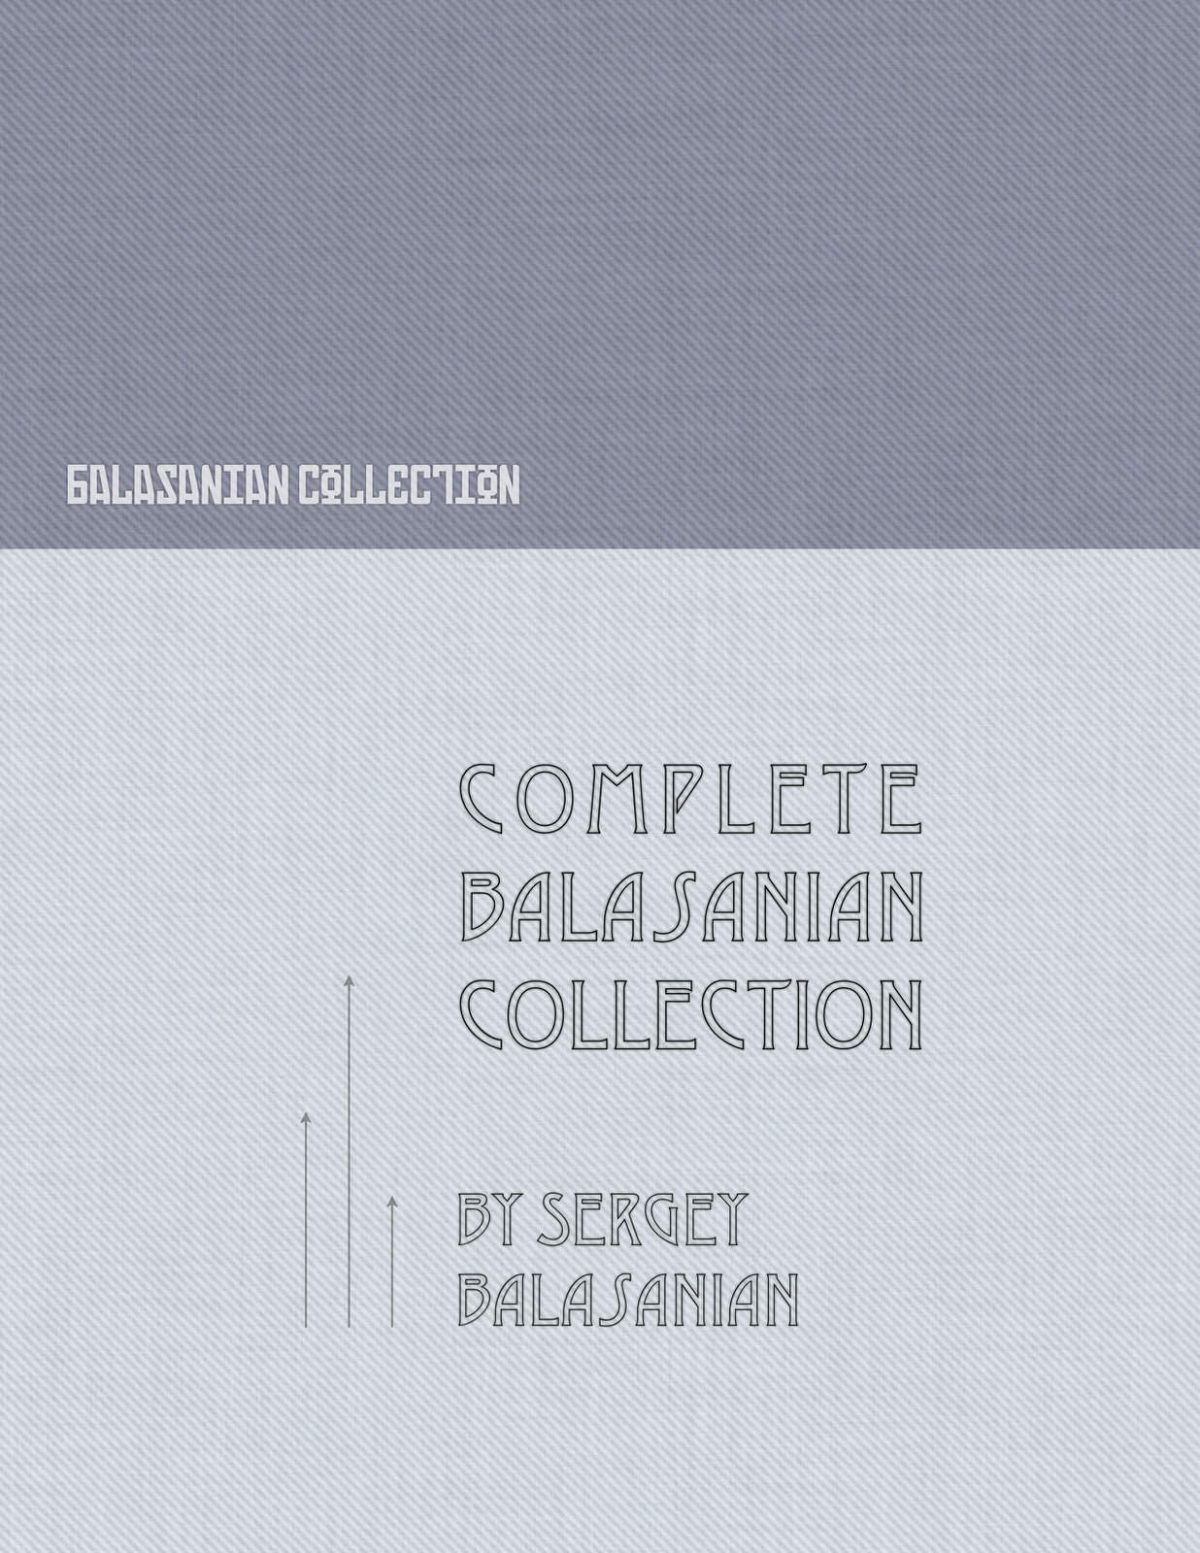 Complete Balasanian Collection